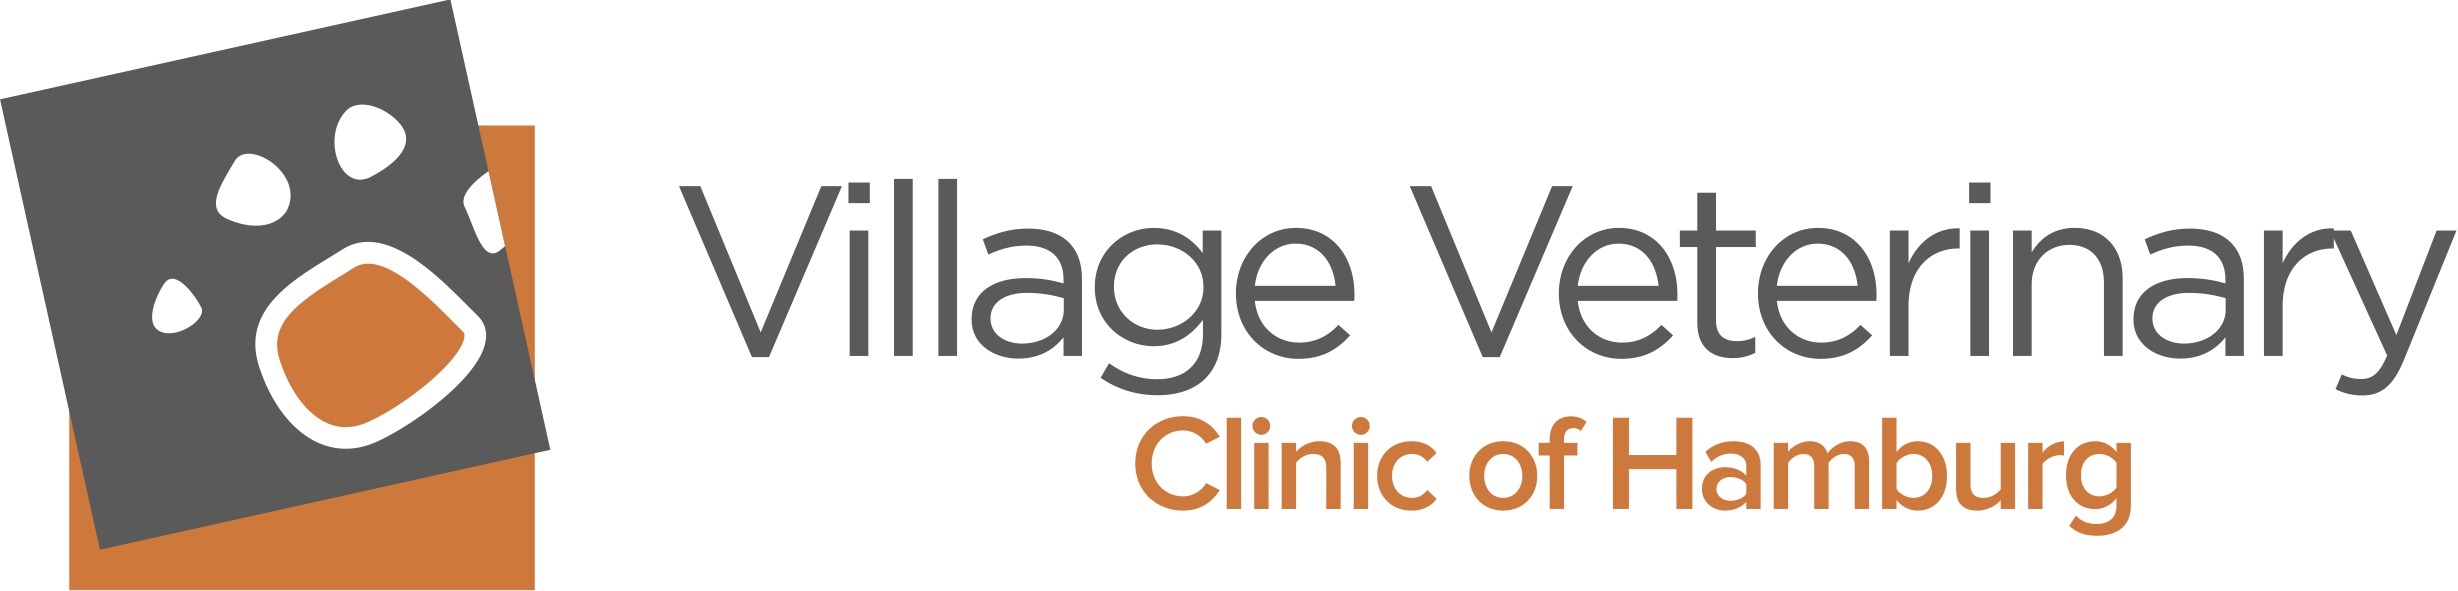 Village Veterinary Clinic of Hamburg